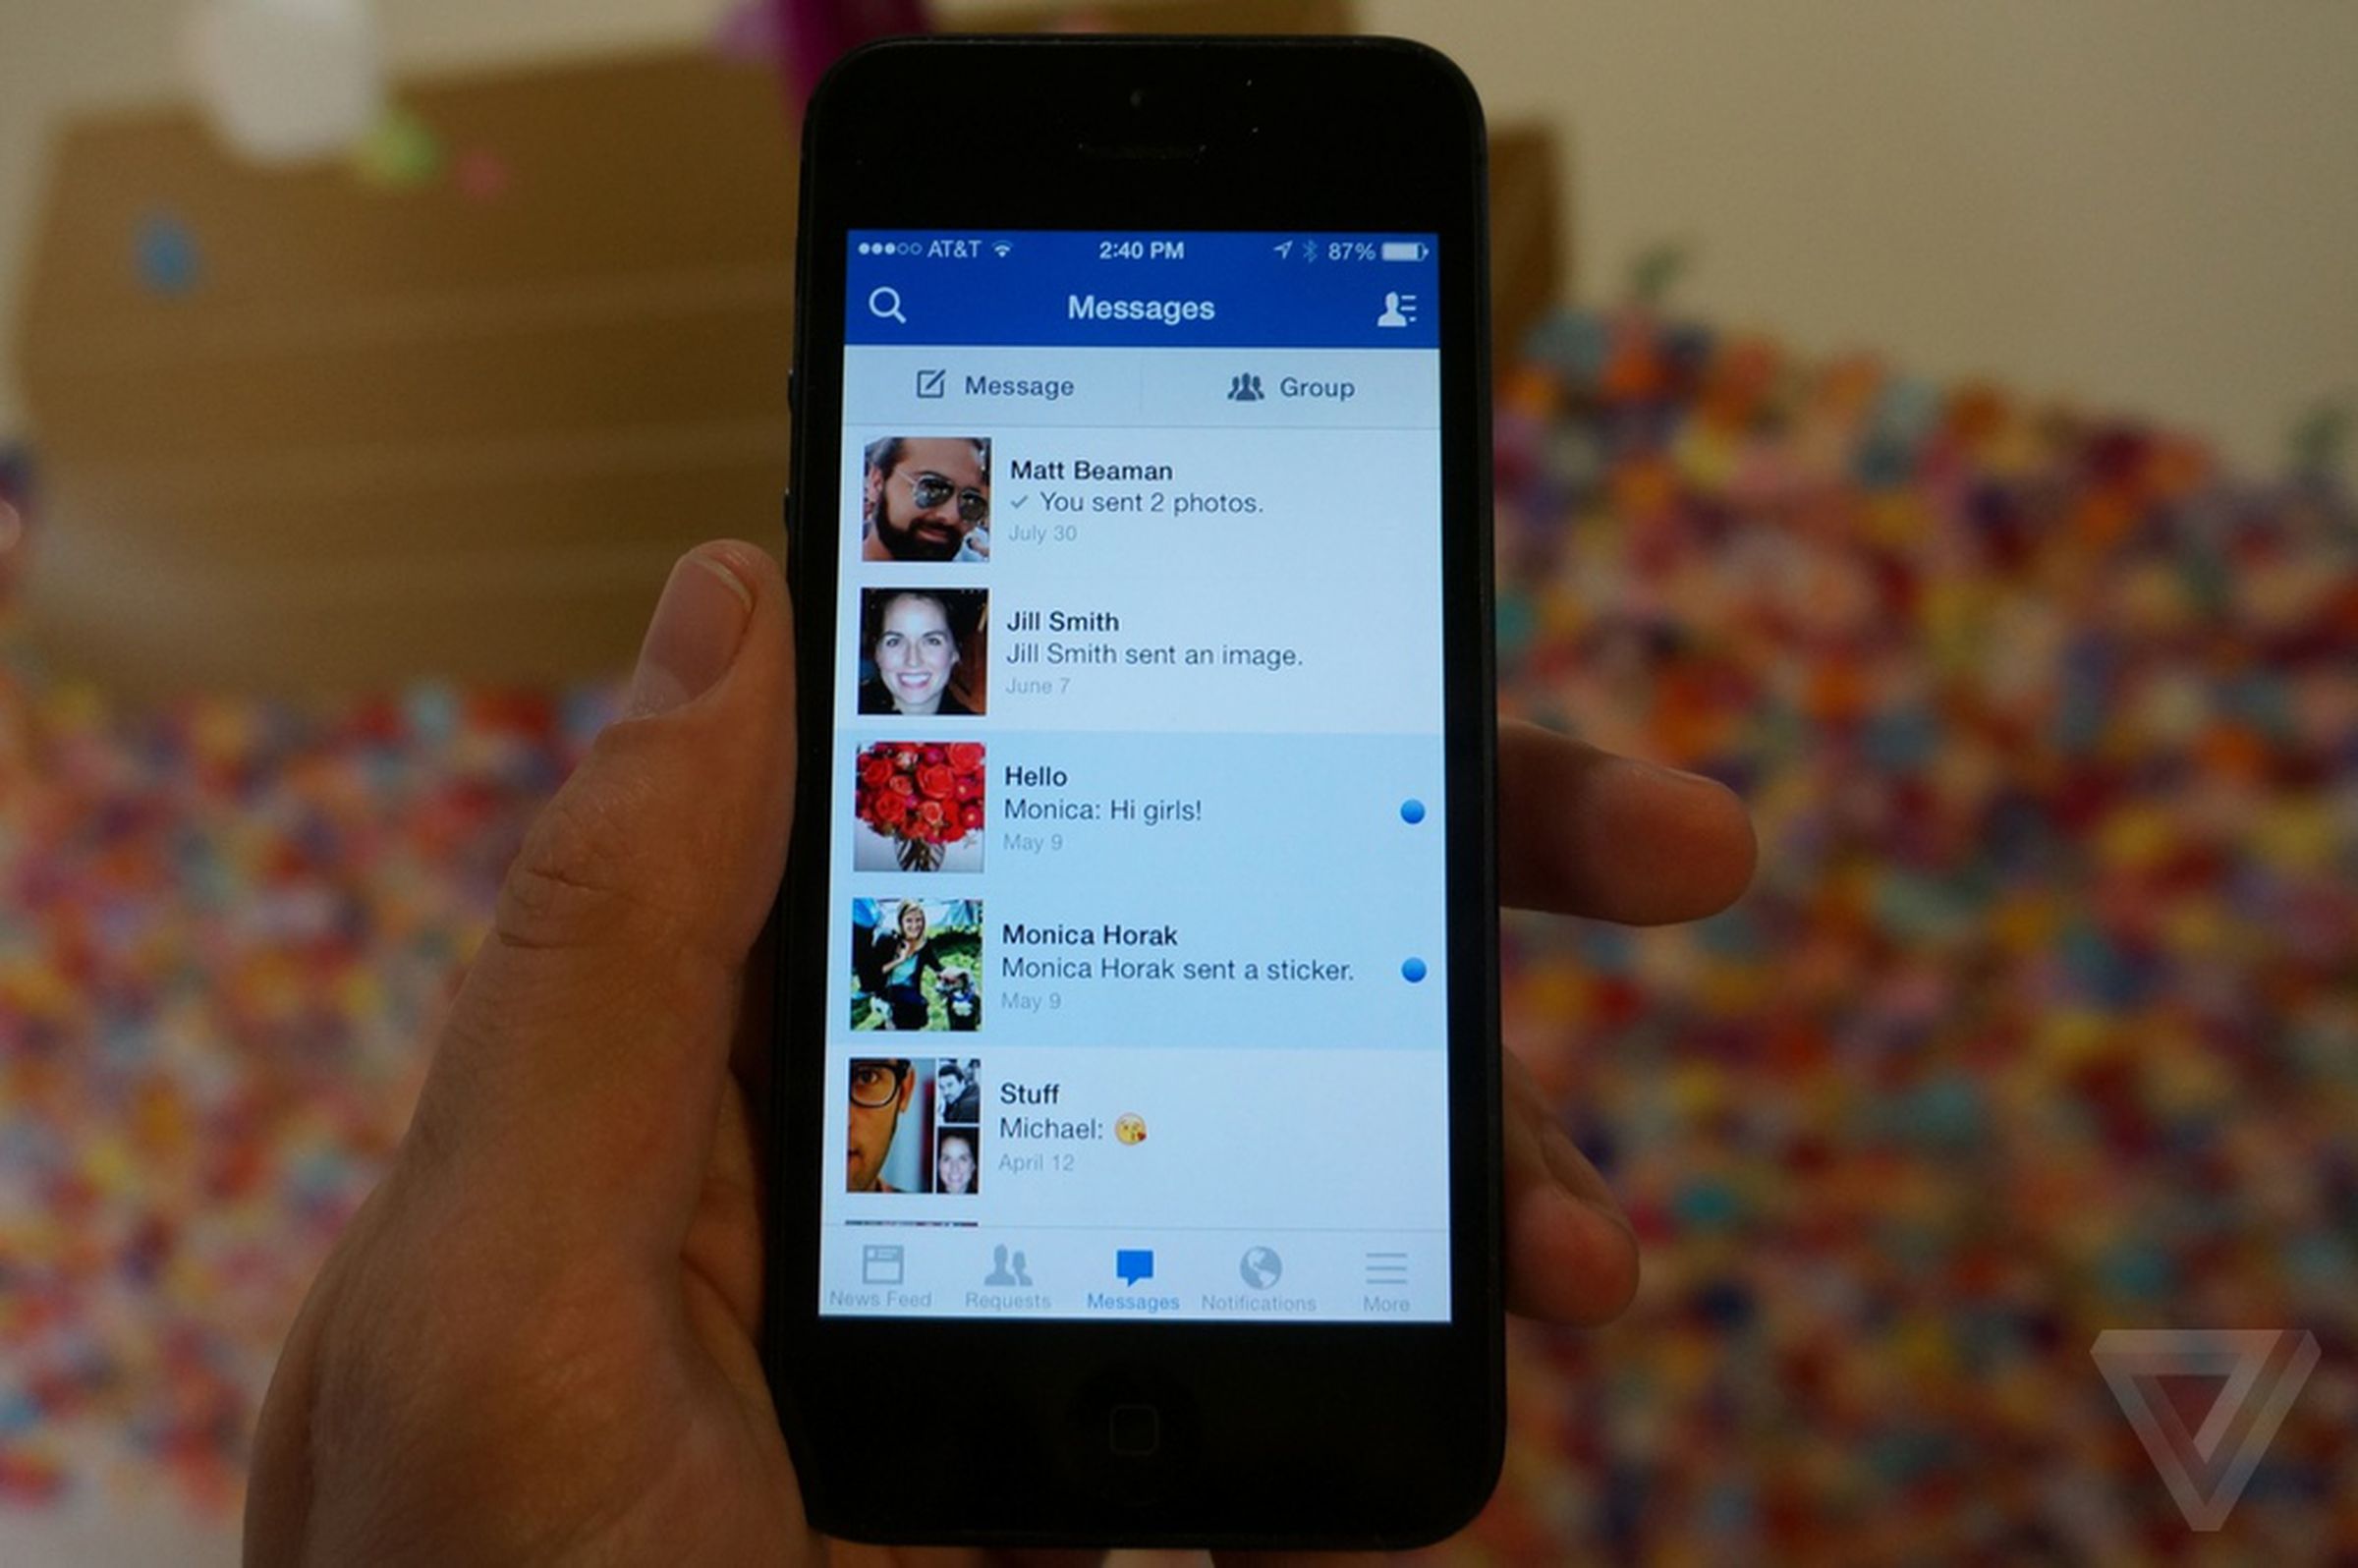 Facebook iOS 7 redesign hands-on photos